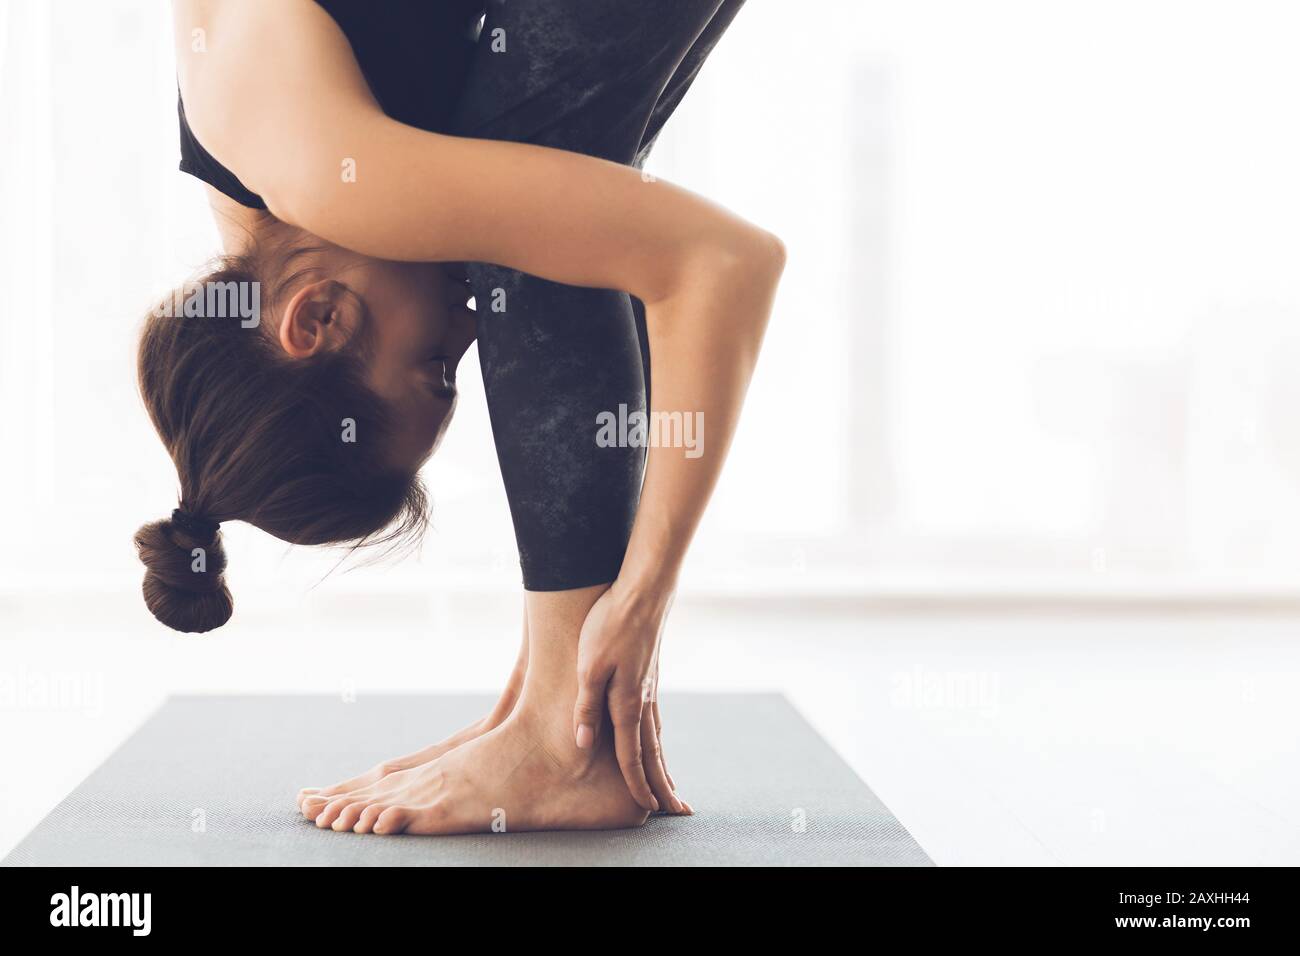 Woman stretching standing in modern light studio Stock Photo